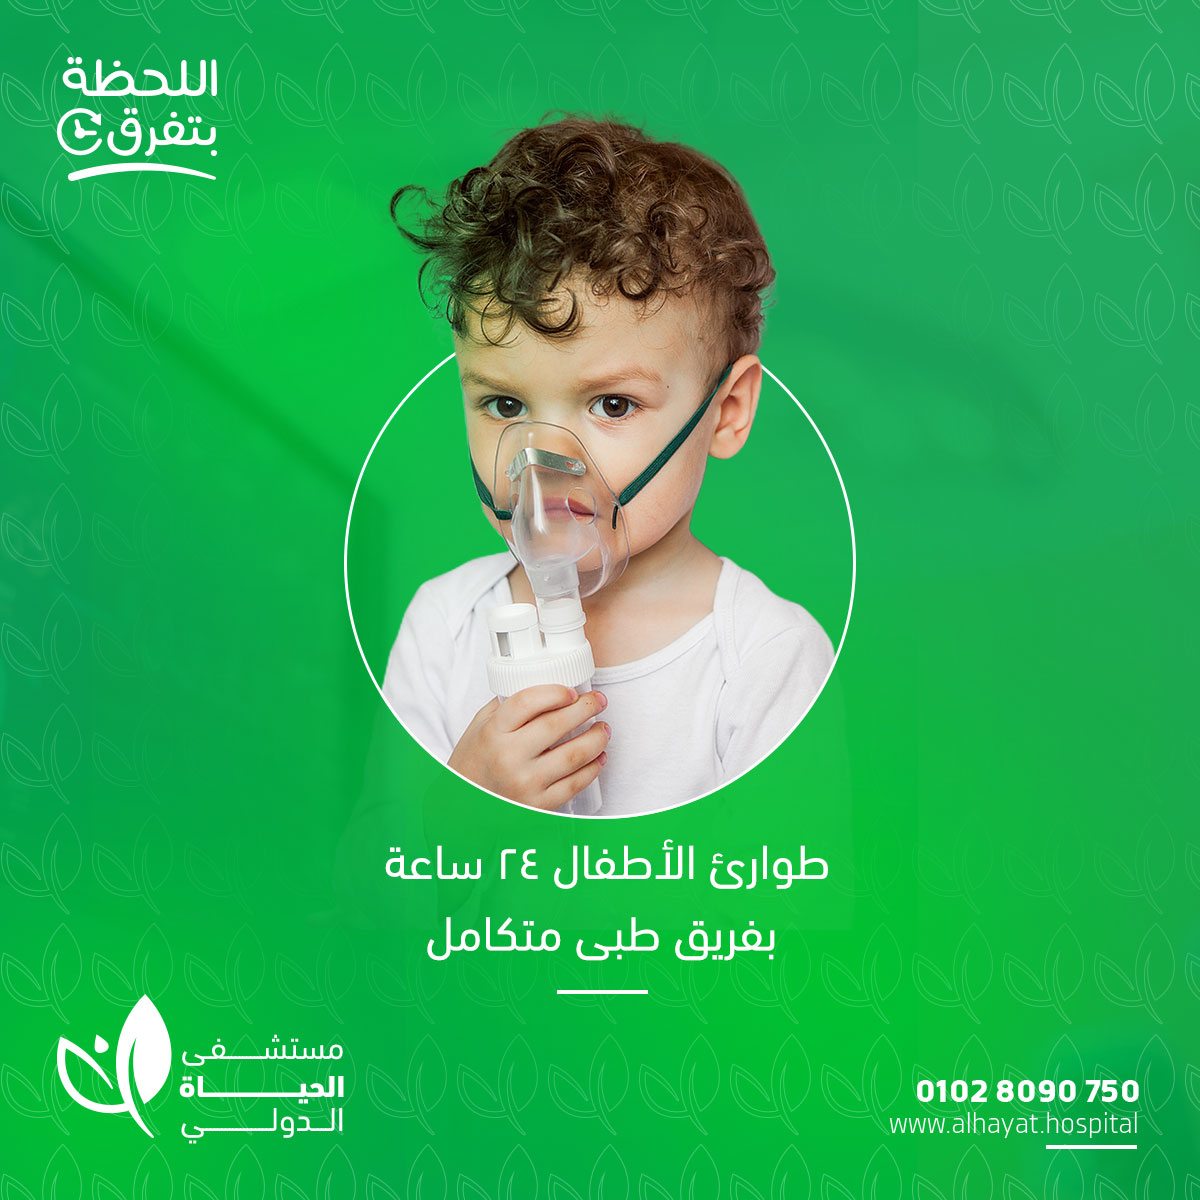 Al Hayat Hospital Facebook campaign social media marketing content creation creative copywriting graphic design